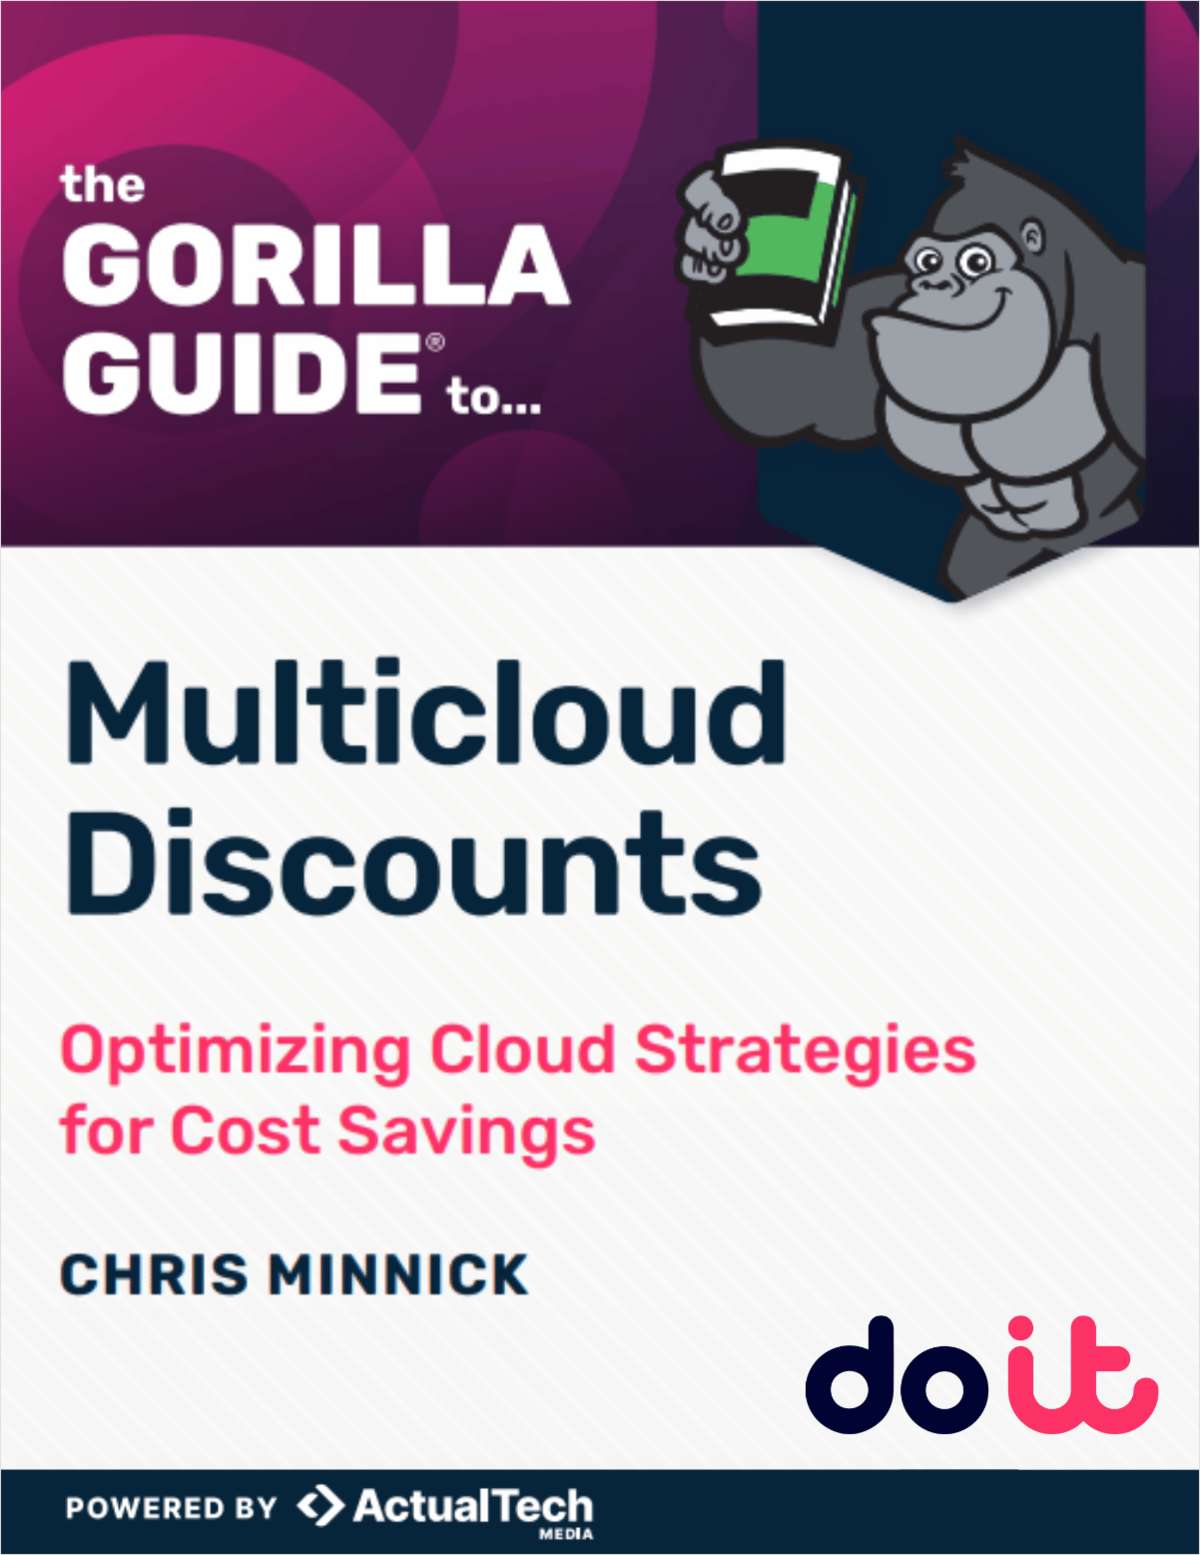 The Gorilla Guide® to Maximizing Multicloud Discounts